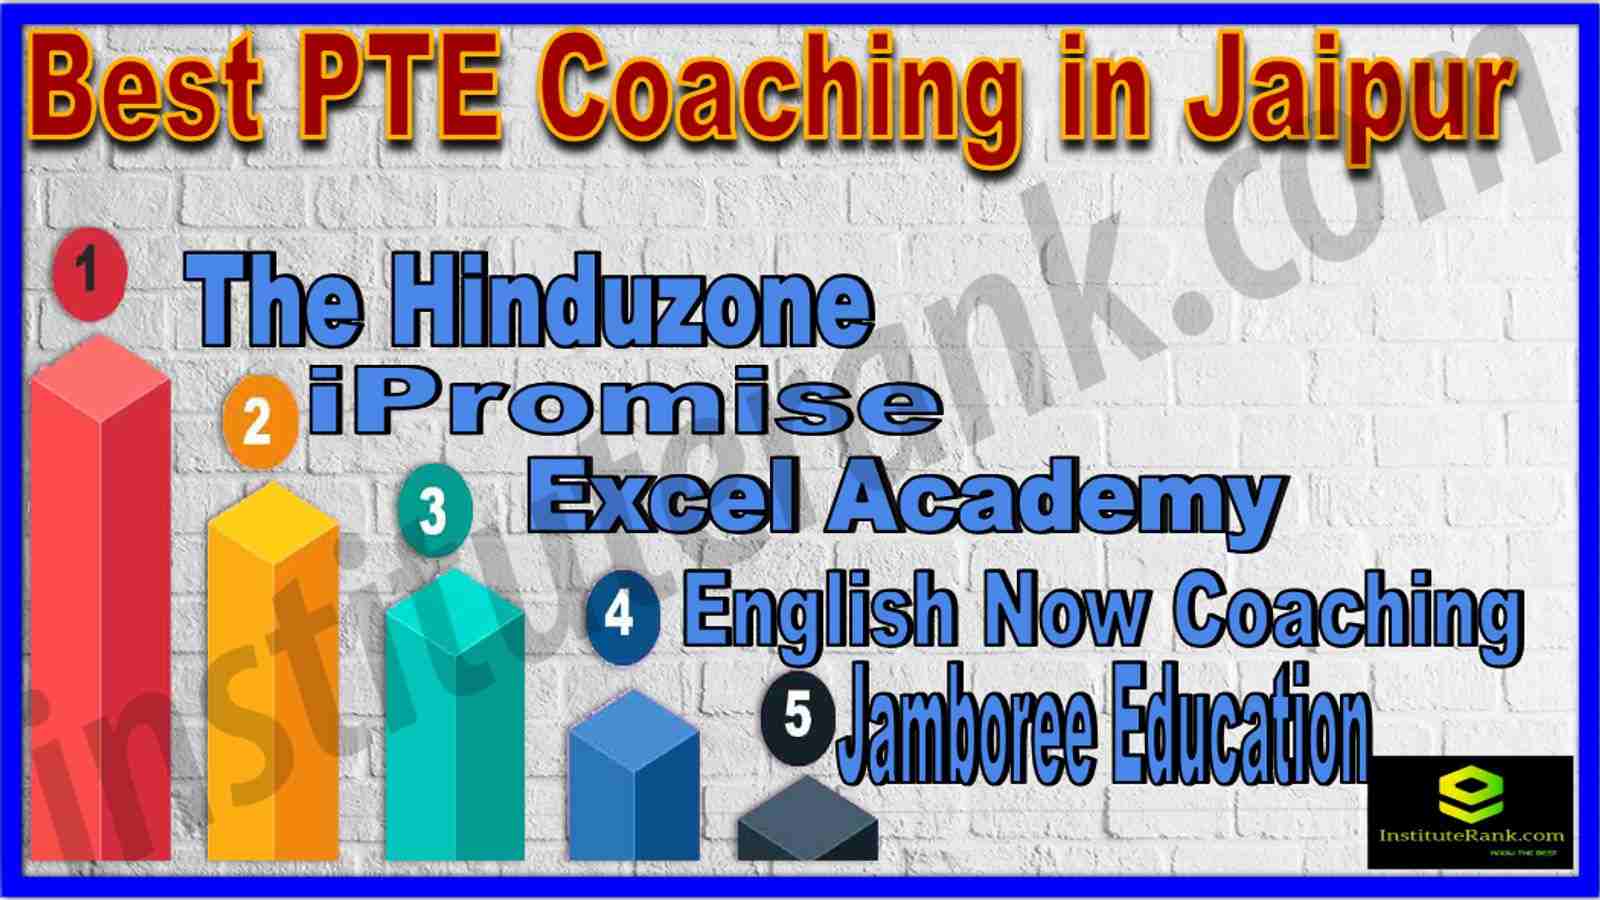 Best PTE Coaching In Jaipur